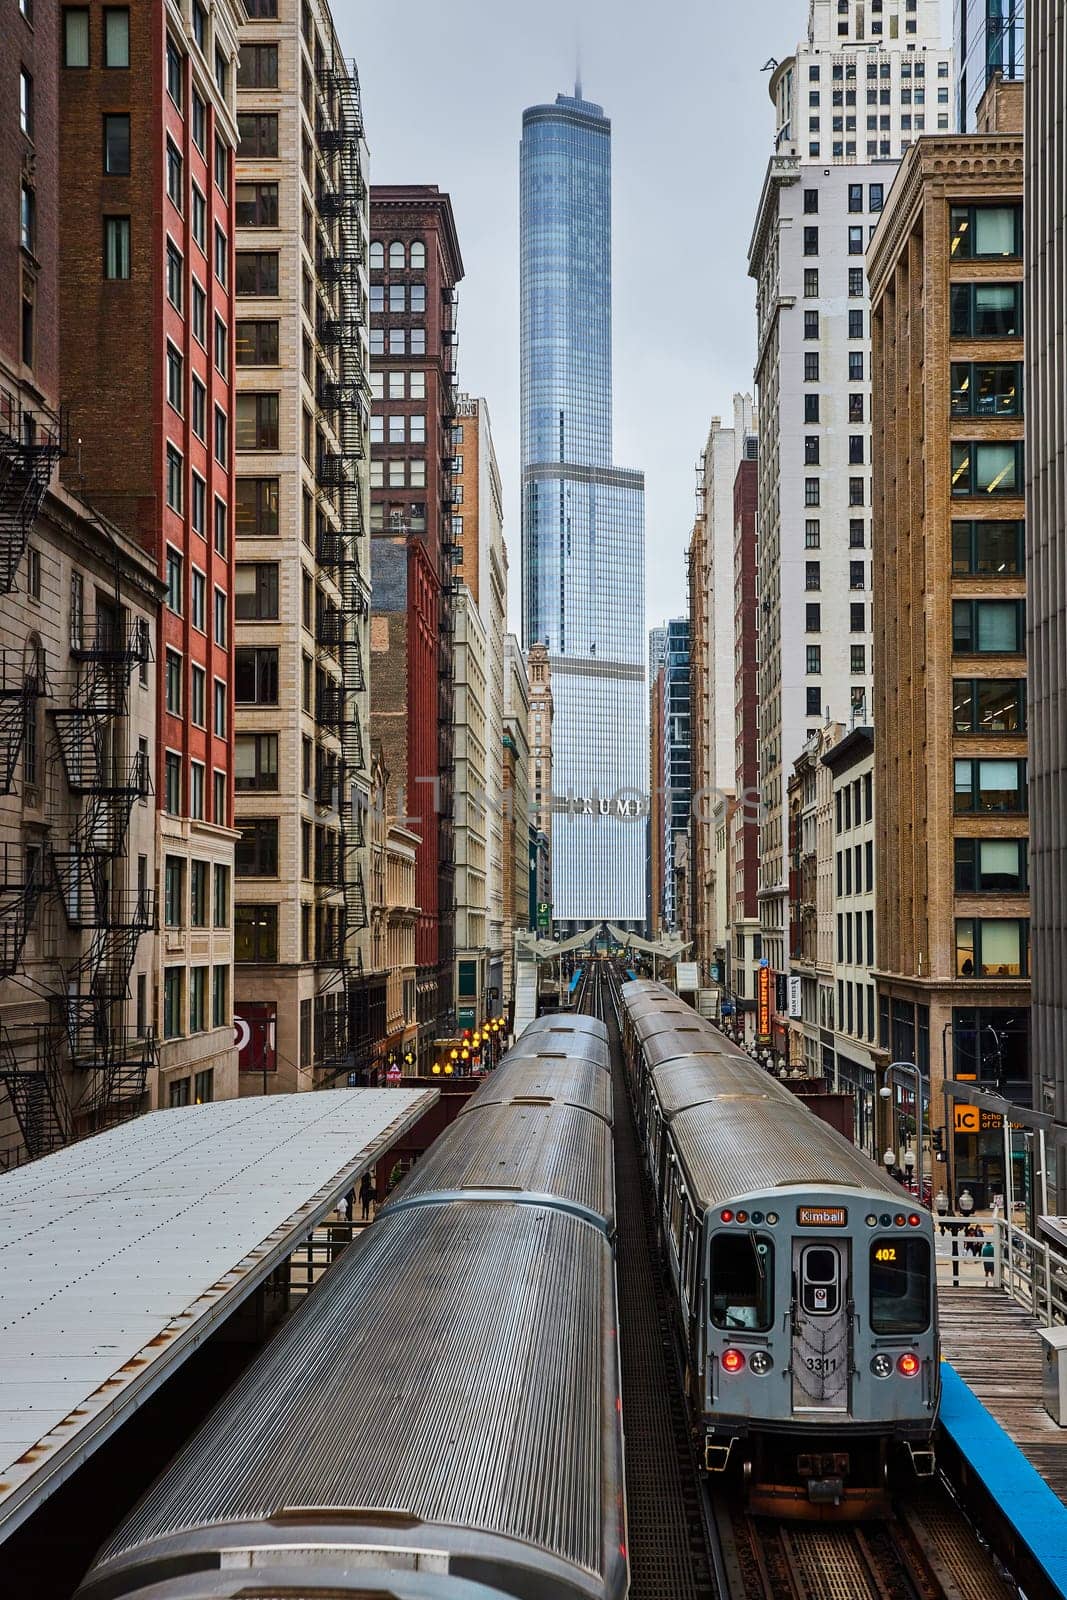 Diverse Architecture and Metropolitan Train System in Vibrant Chicago, 2023